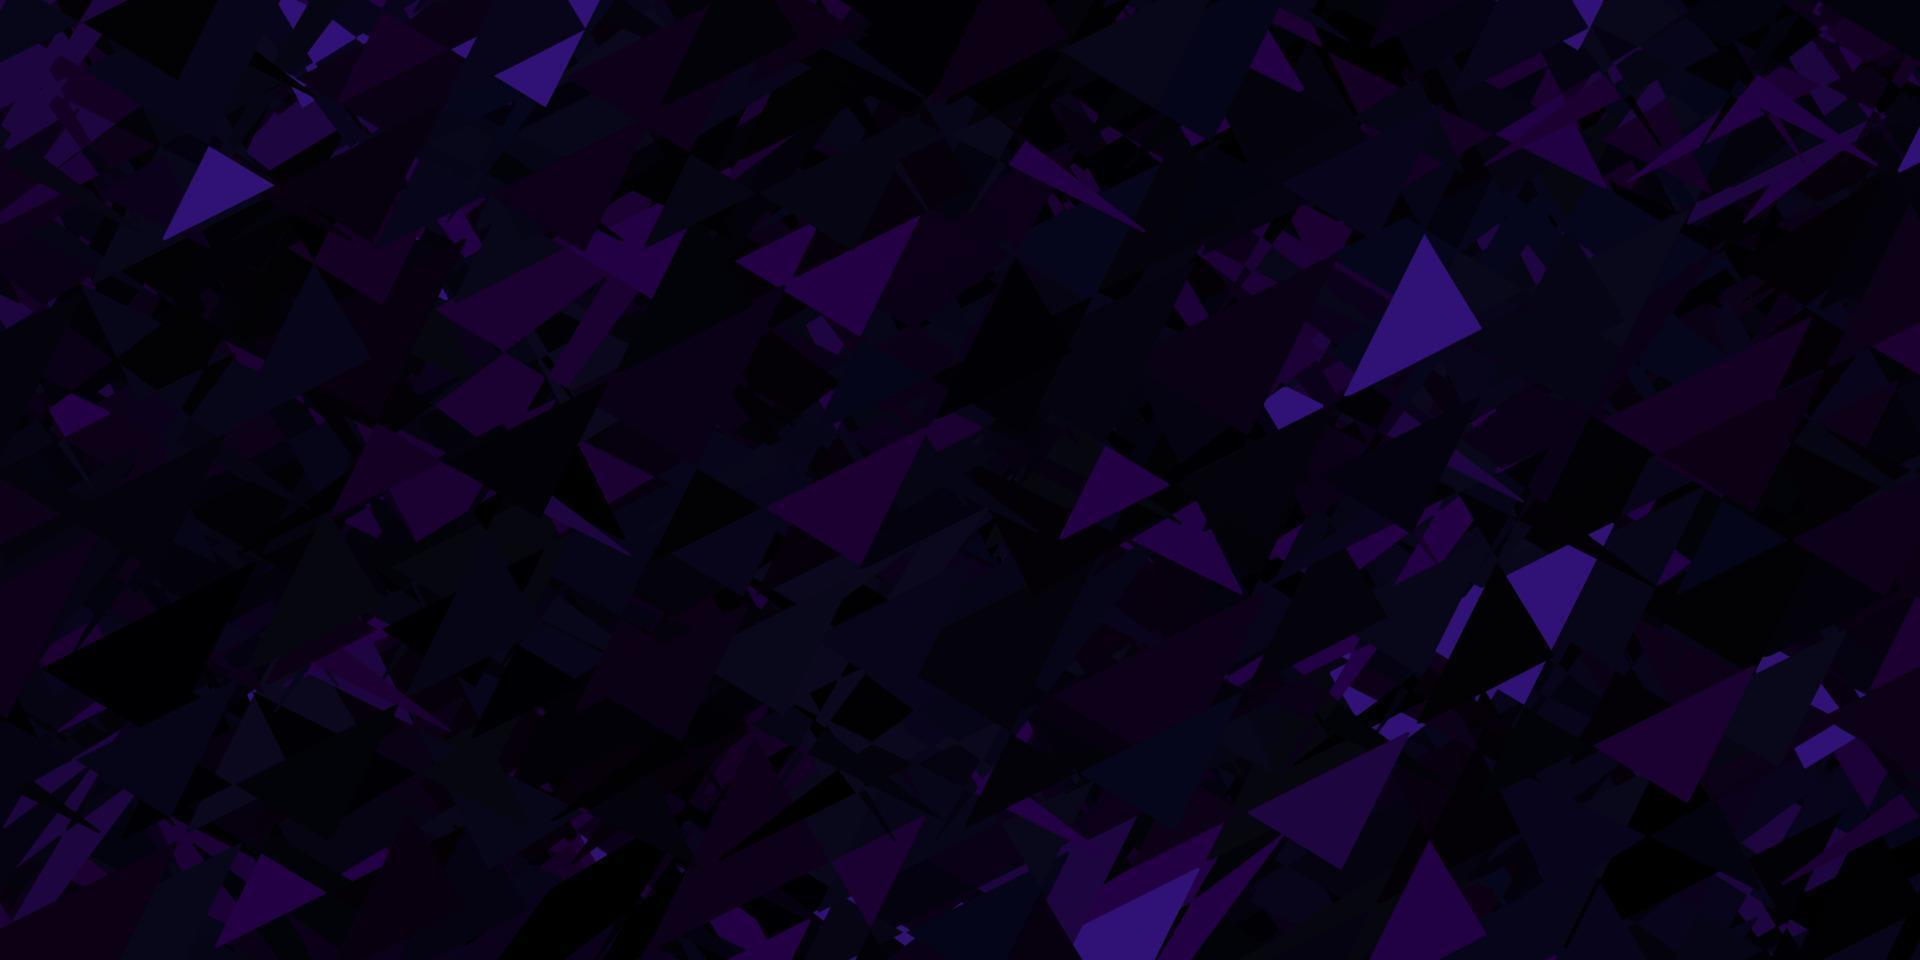 layout de vetor roxo escuro com formas de triângulo.